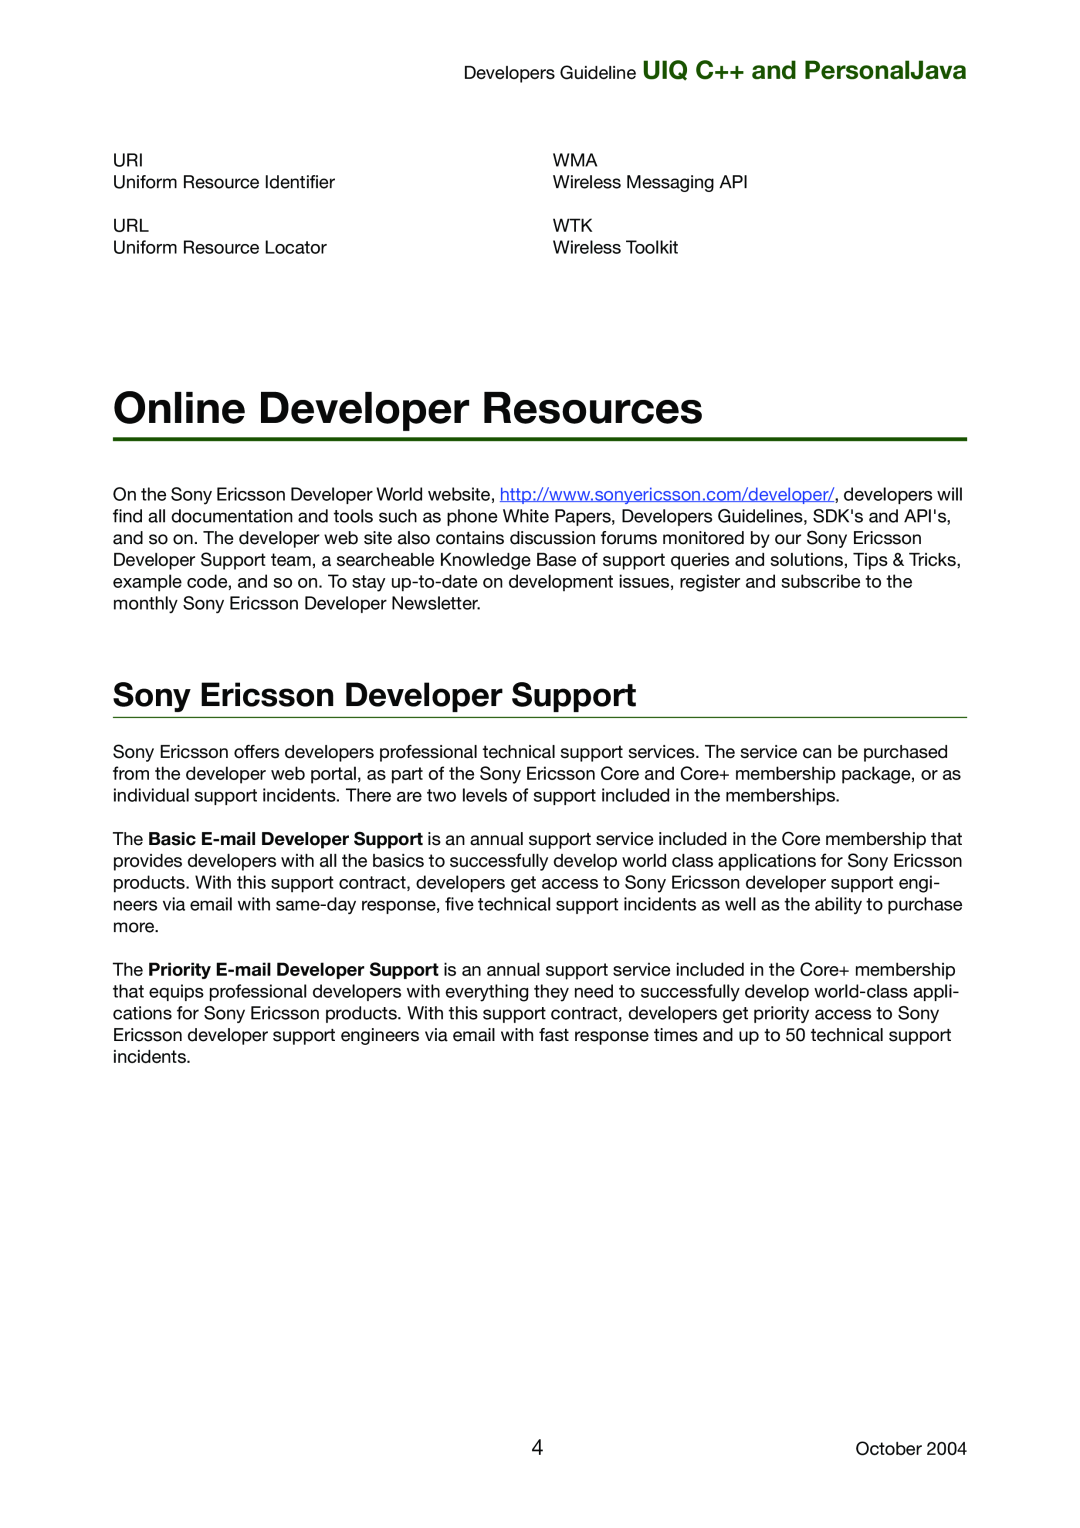 Sony Ericsson P900, P800 manual Online Developer Resources, Sony Ericsson Developer Support 